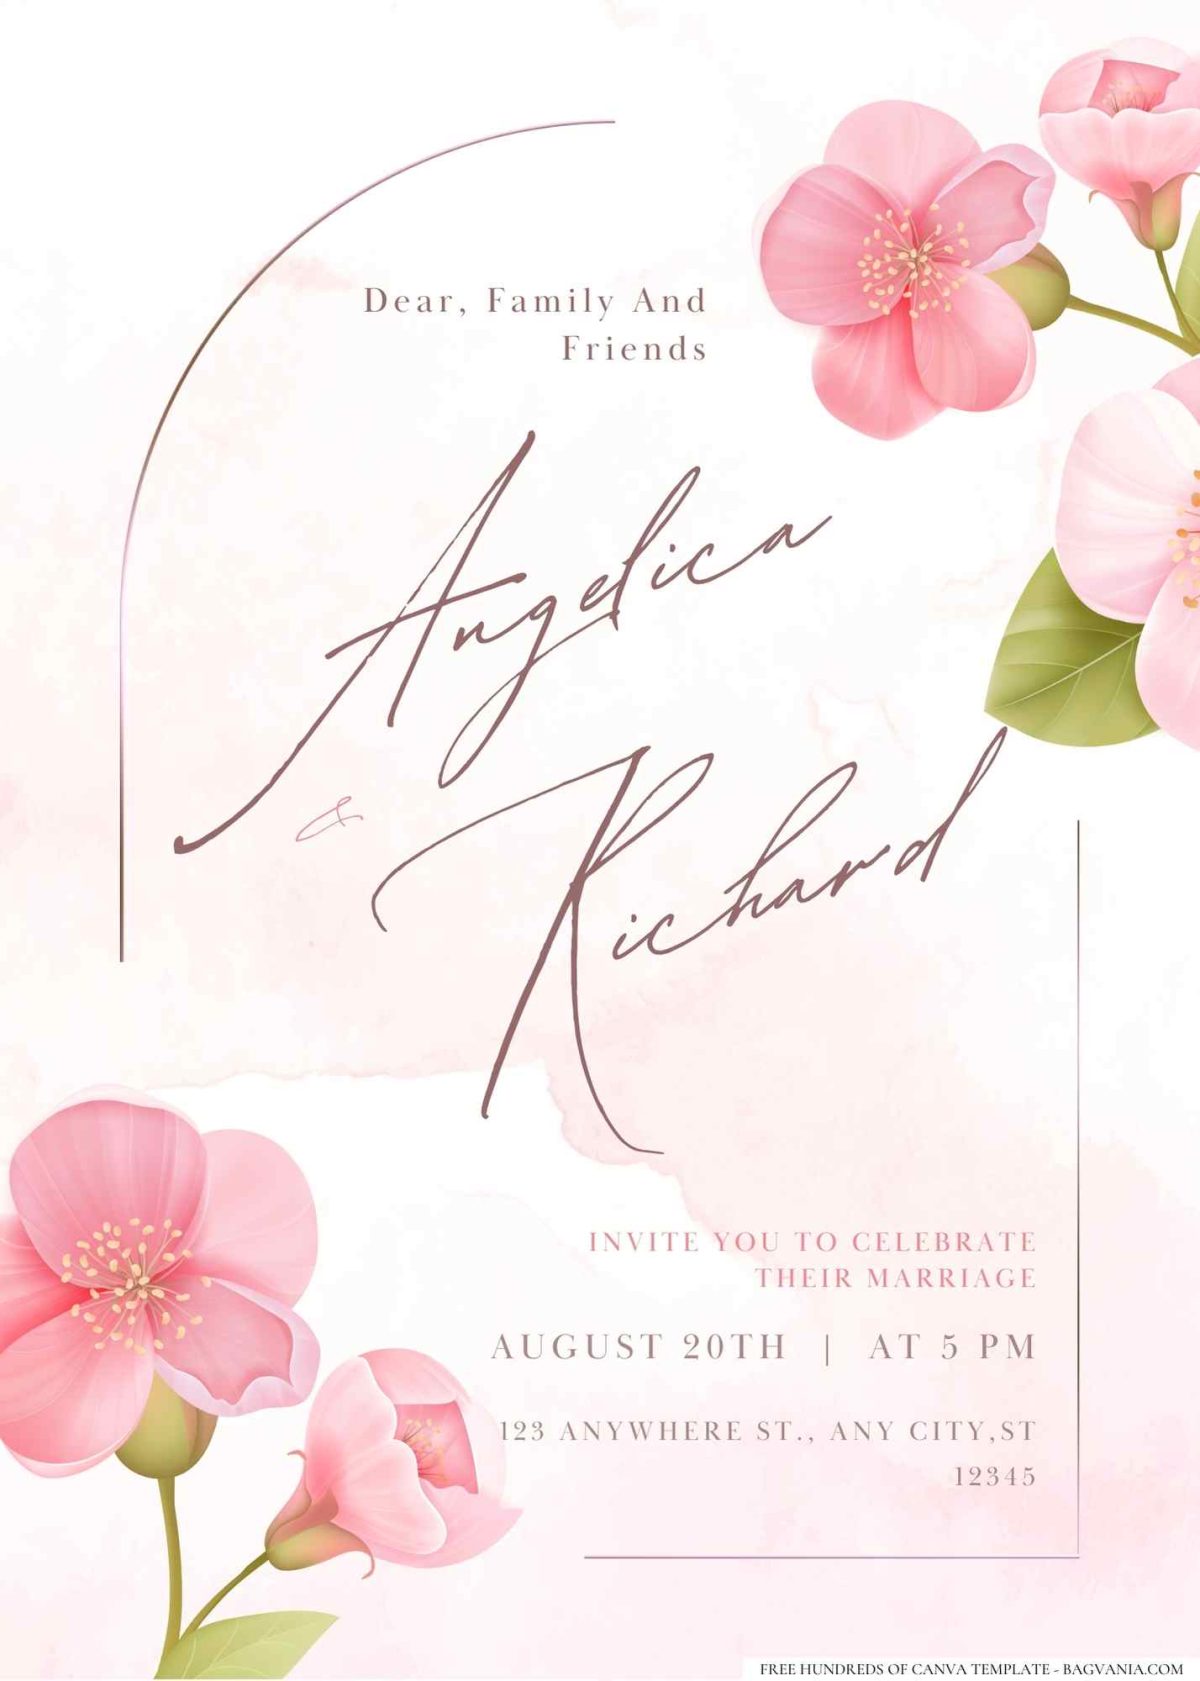 FREE Editable Cherry blossom-inspired for a romantic feel wedding invitation